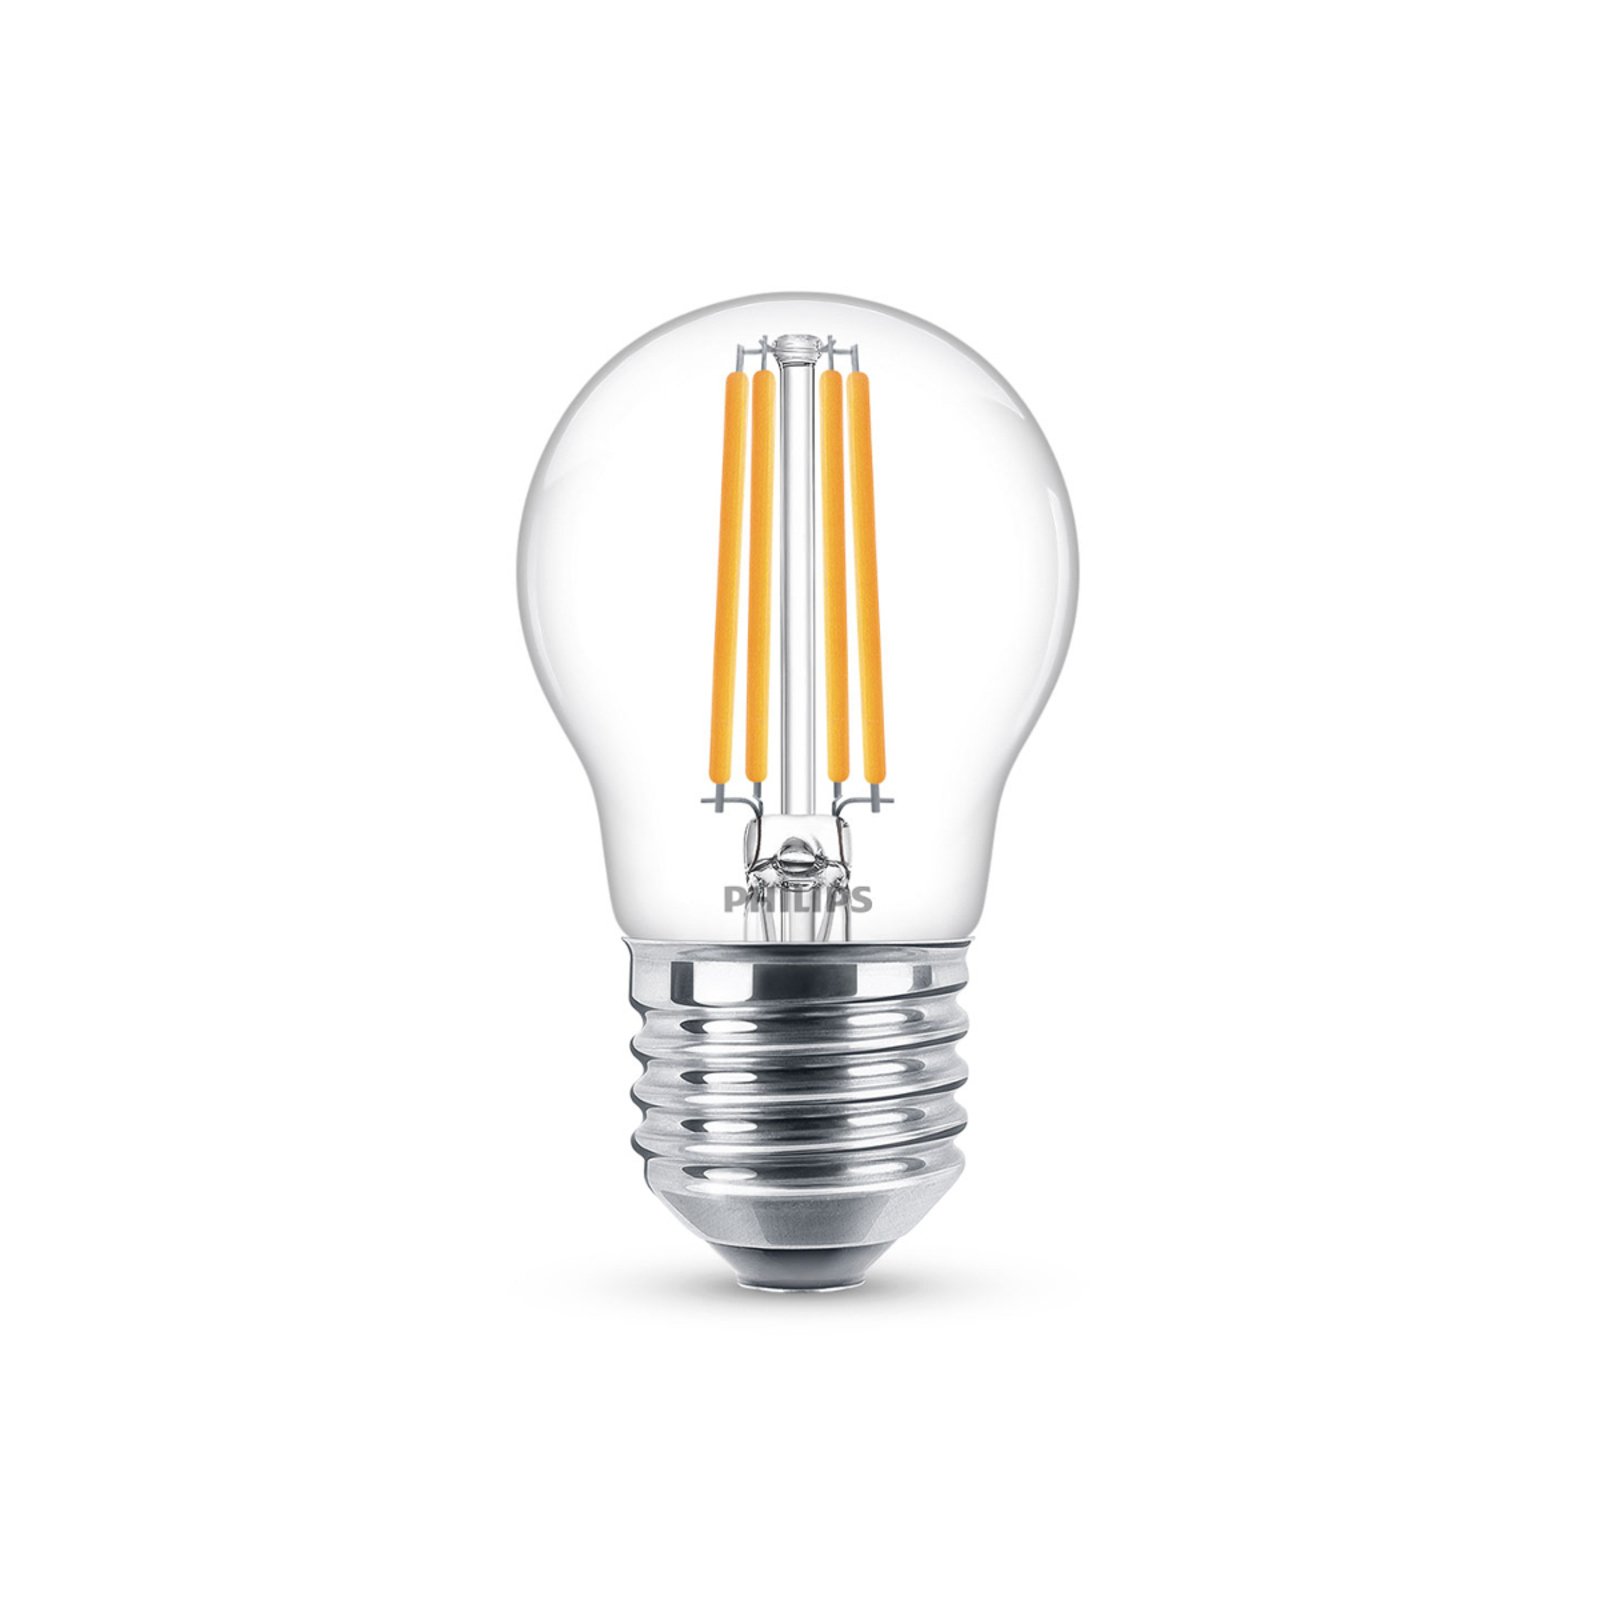 Philips Classic LED bulb E27 P45 6.5W 2,700K clear